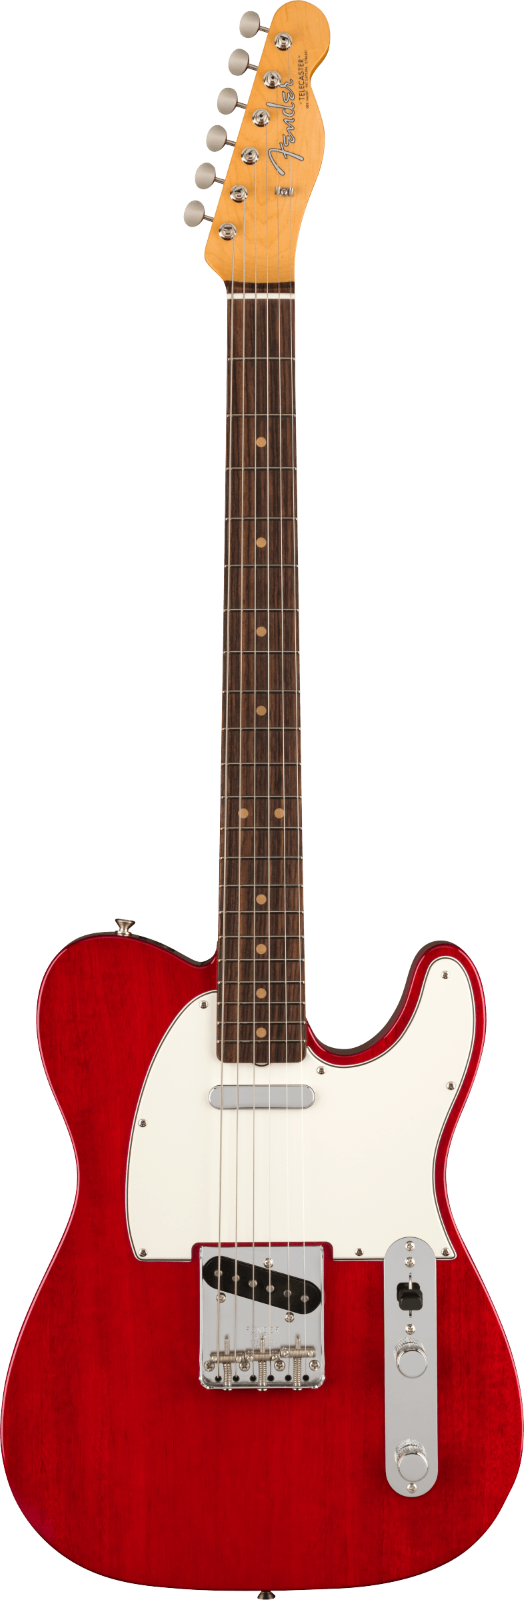 Fender American Vintage II 1963 Telecaster, Palisandergriffbrett, Crimson Red Transparent : photo 1